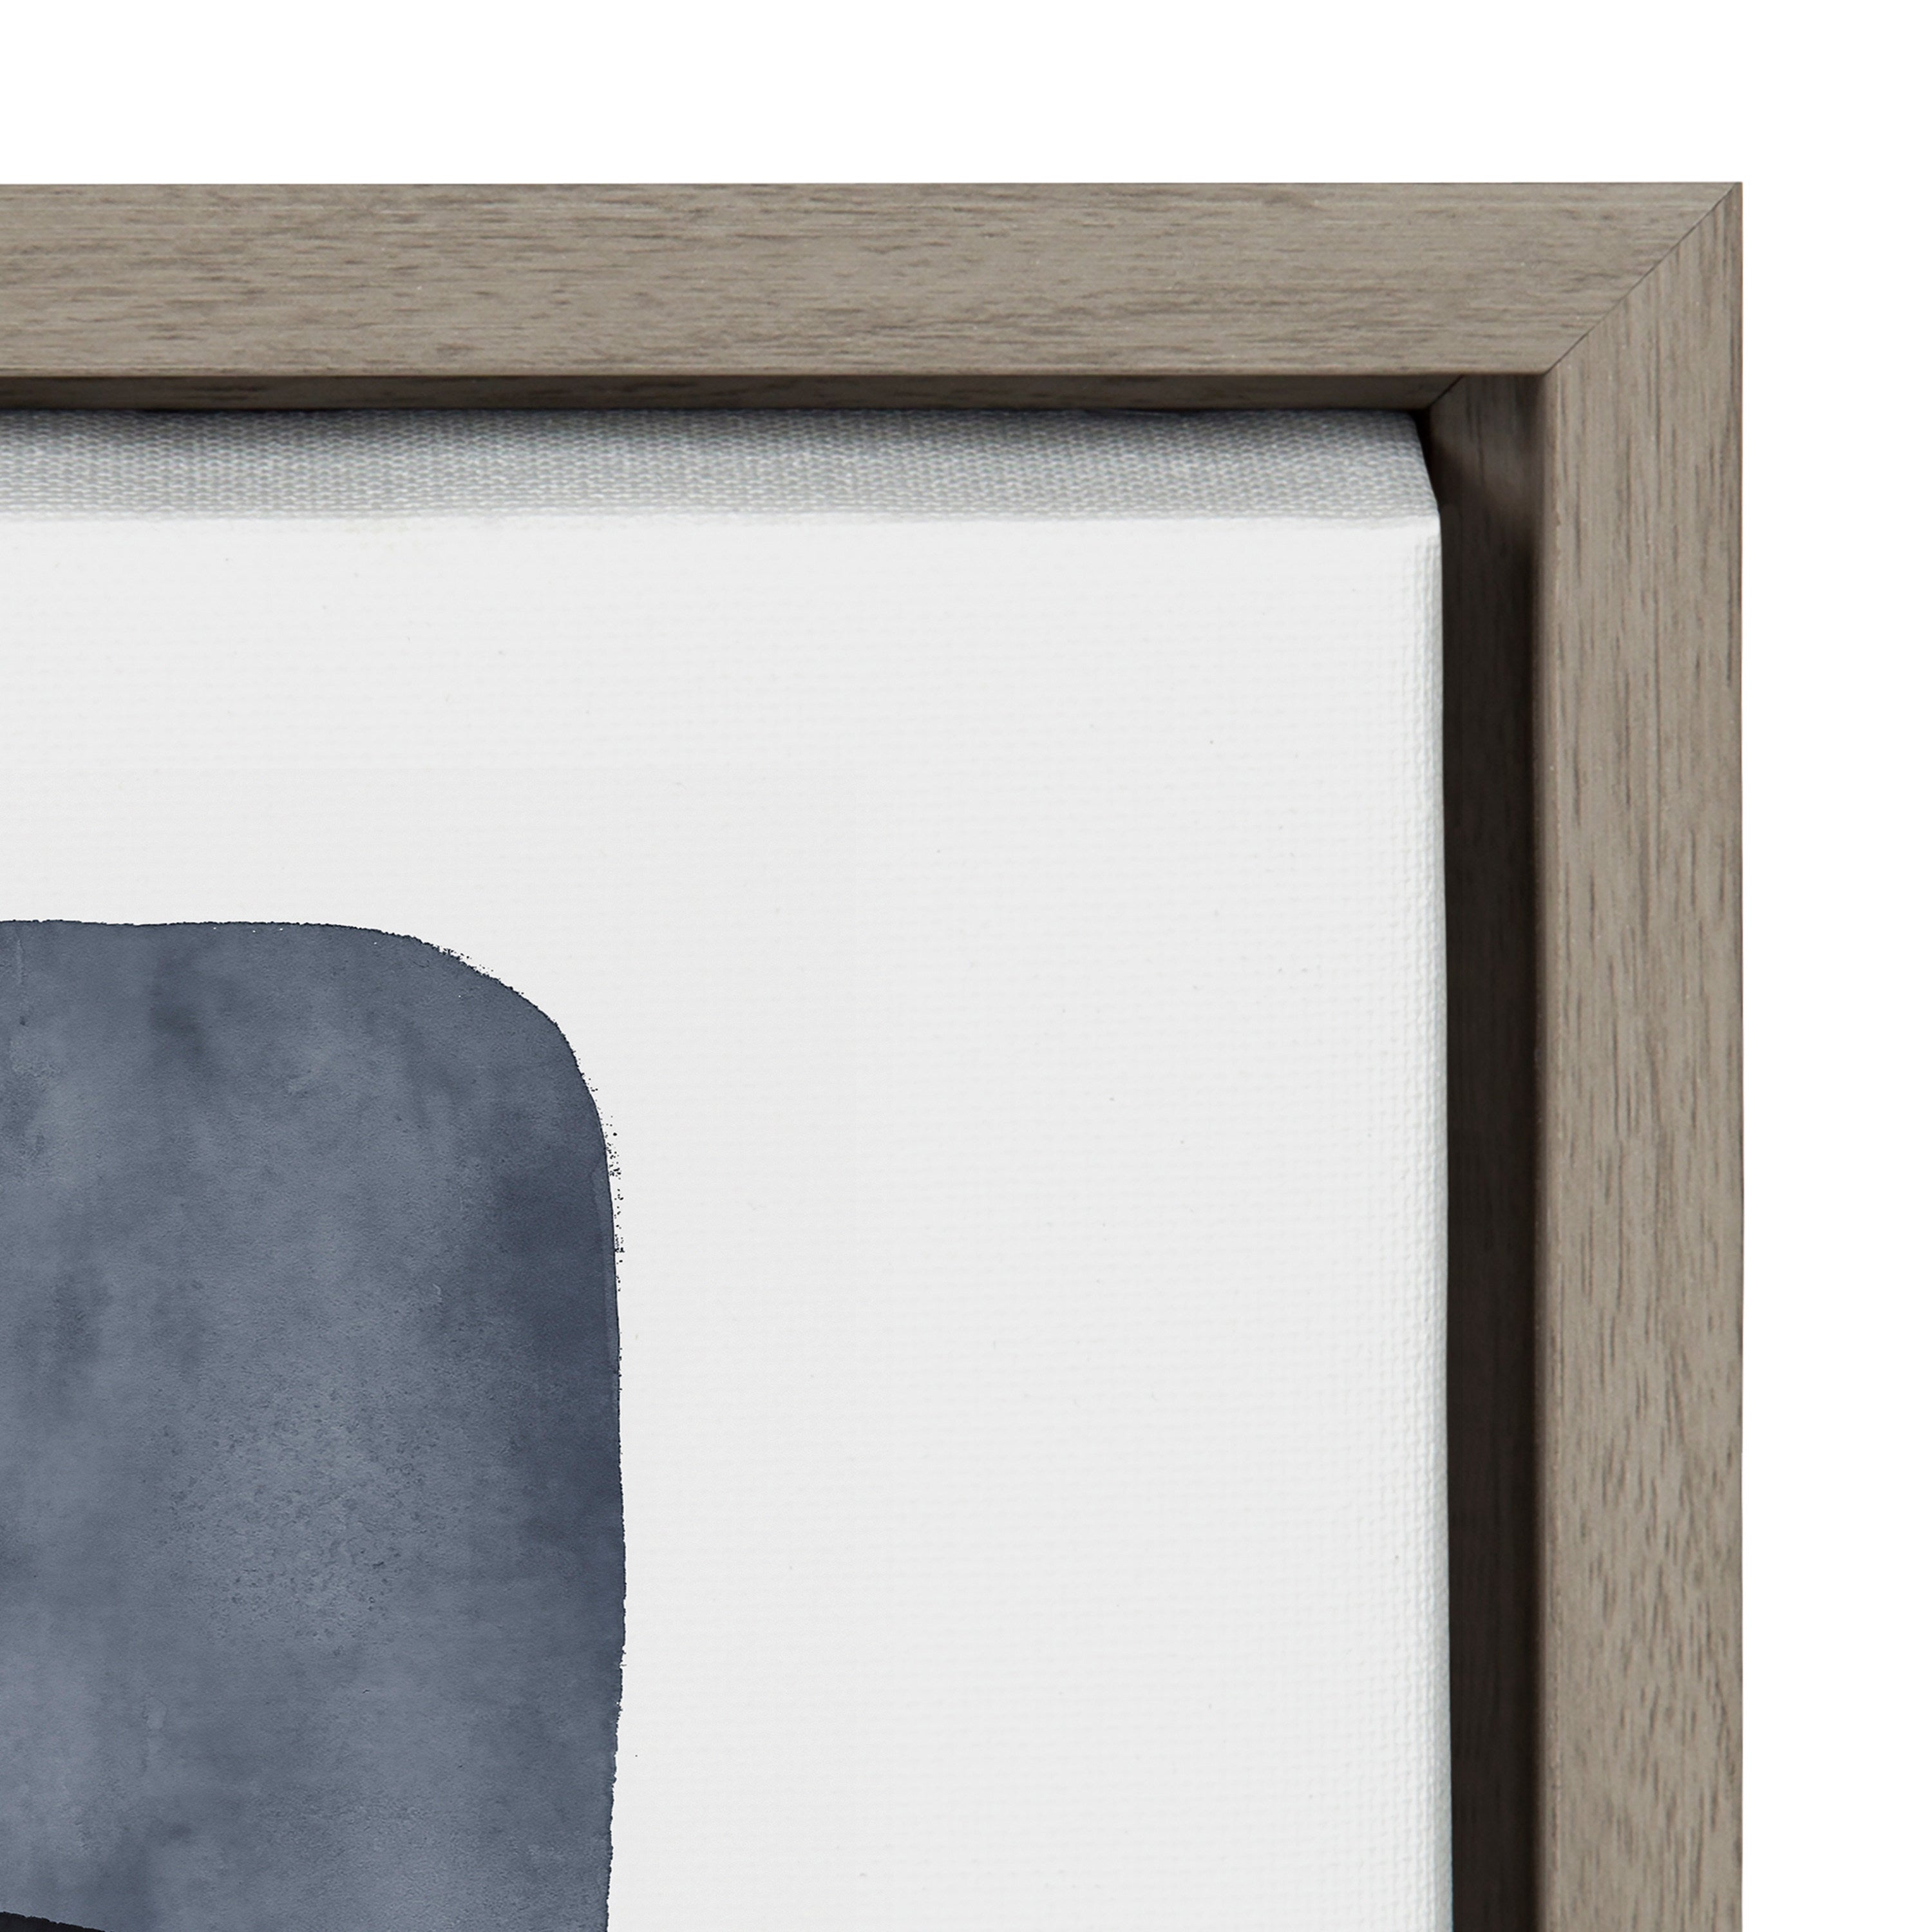 Sylvie Navy Block Abstract Framed Canvas by Amy Lighthall